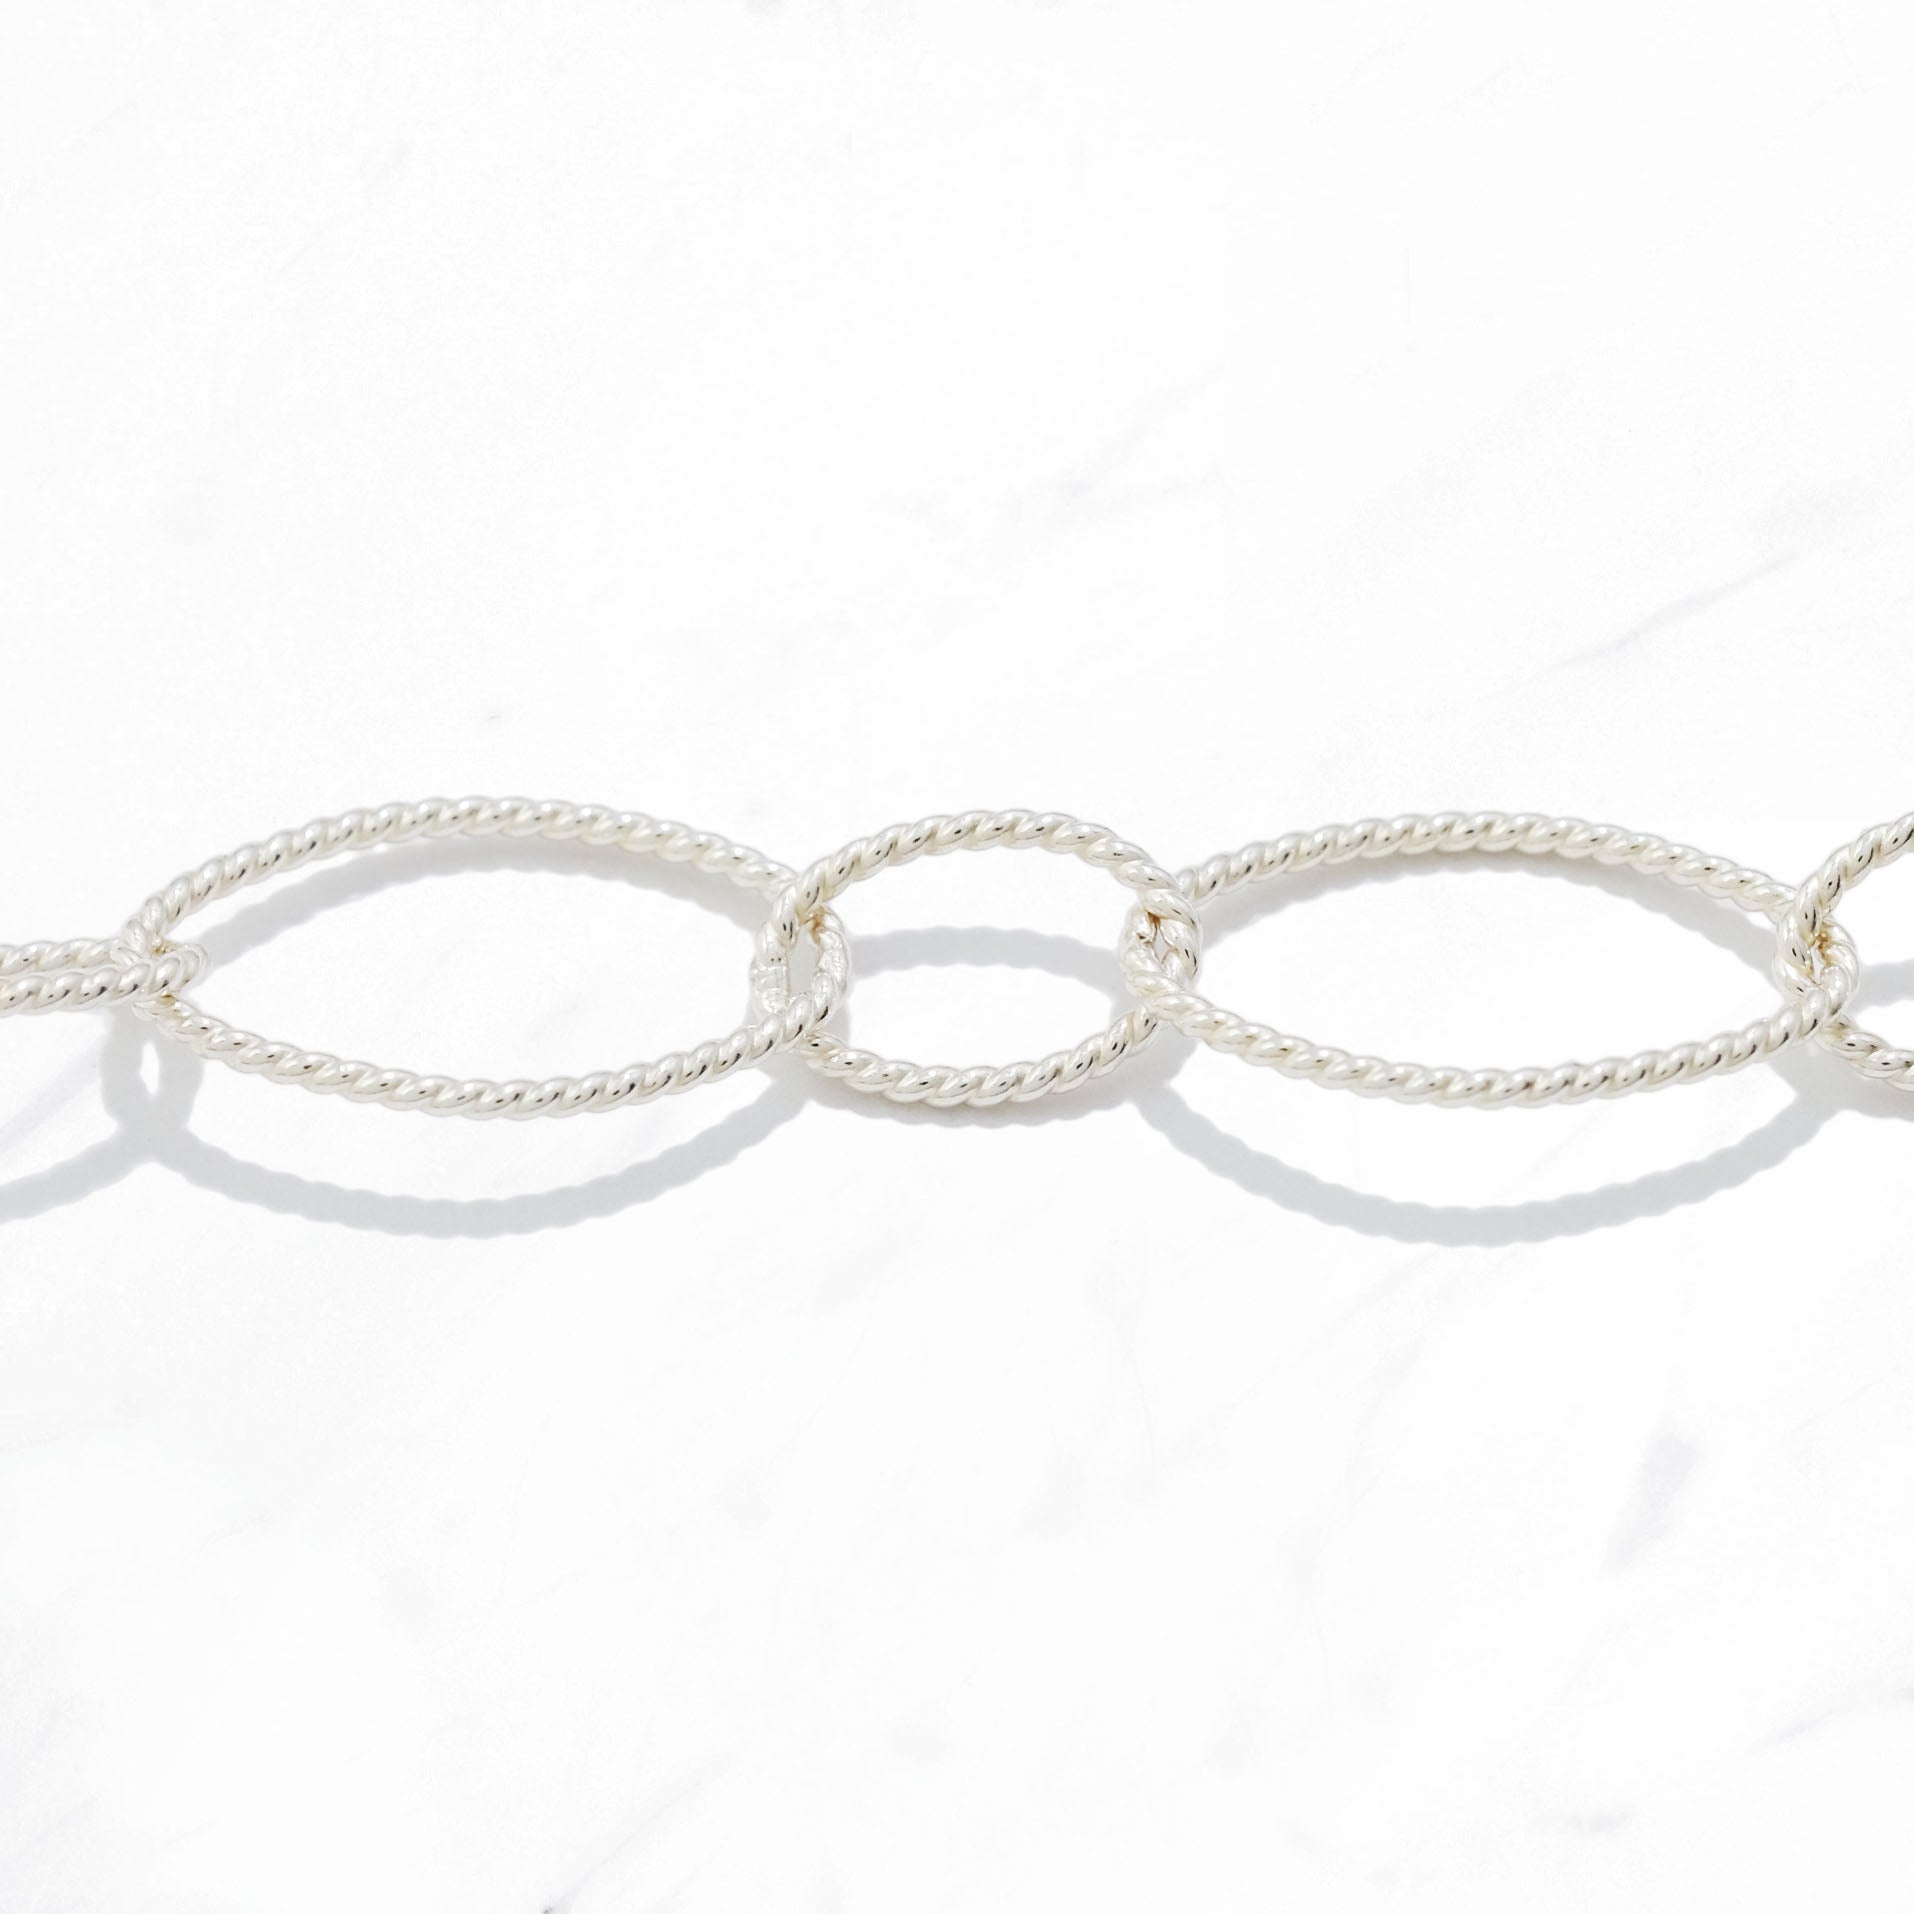 Silver Twist Chain Necklace